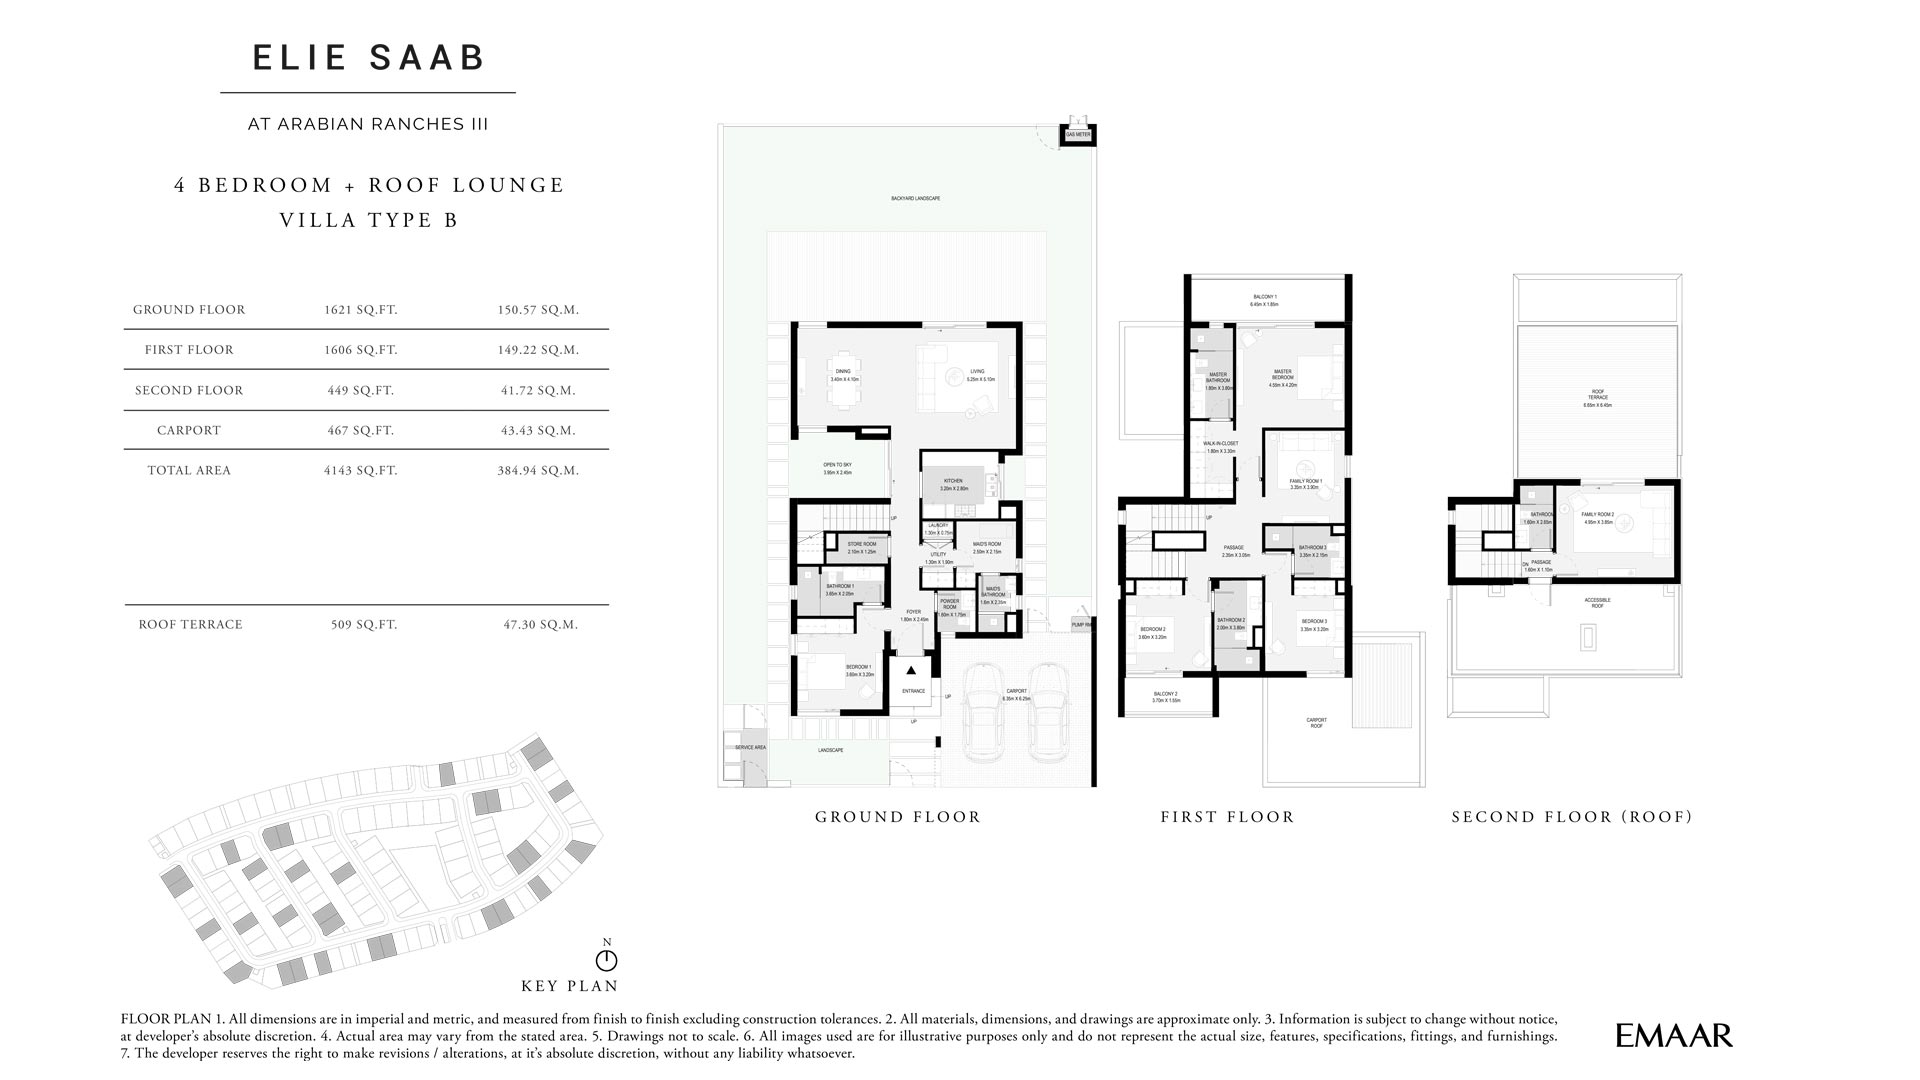 4 Bedroom Type B Elie Saab Villas Floor Plan